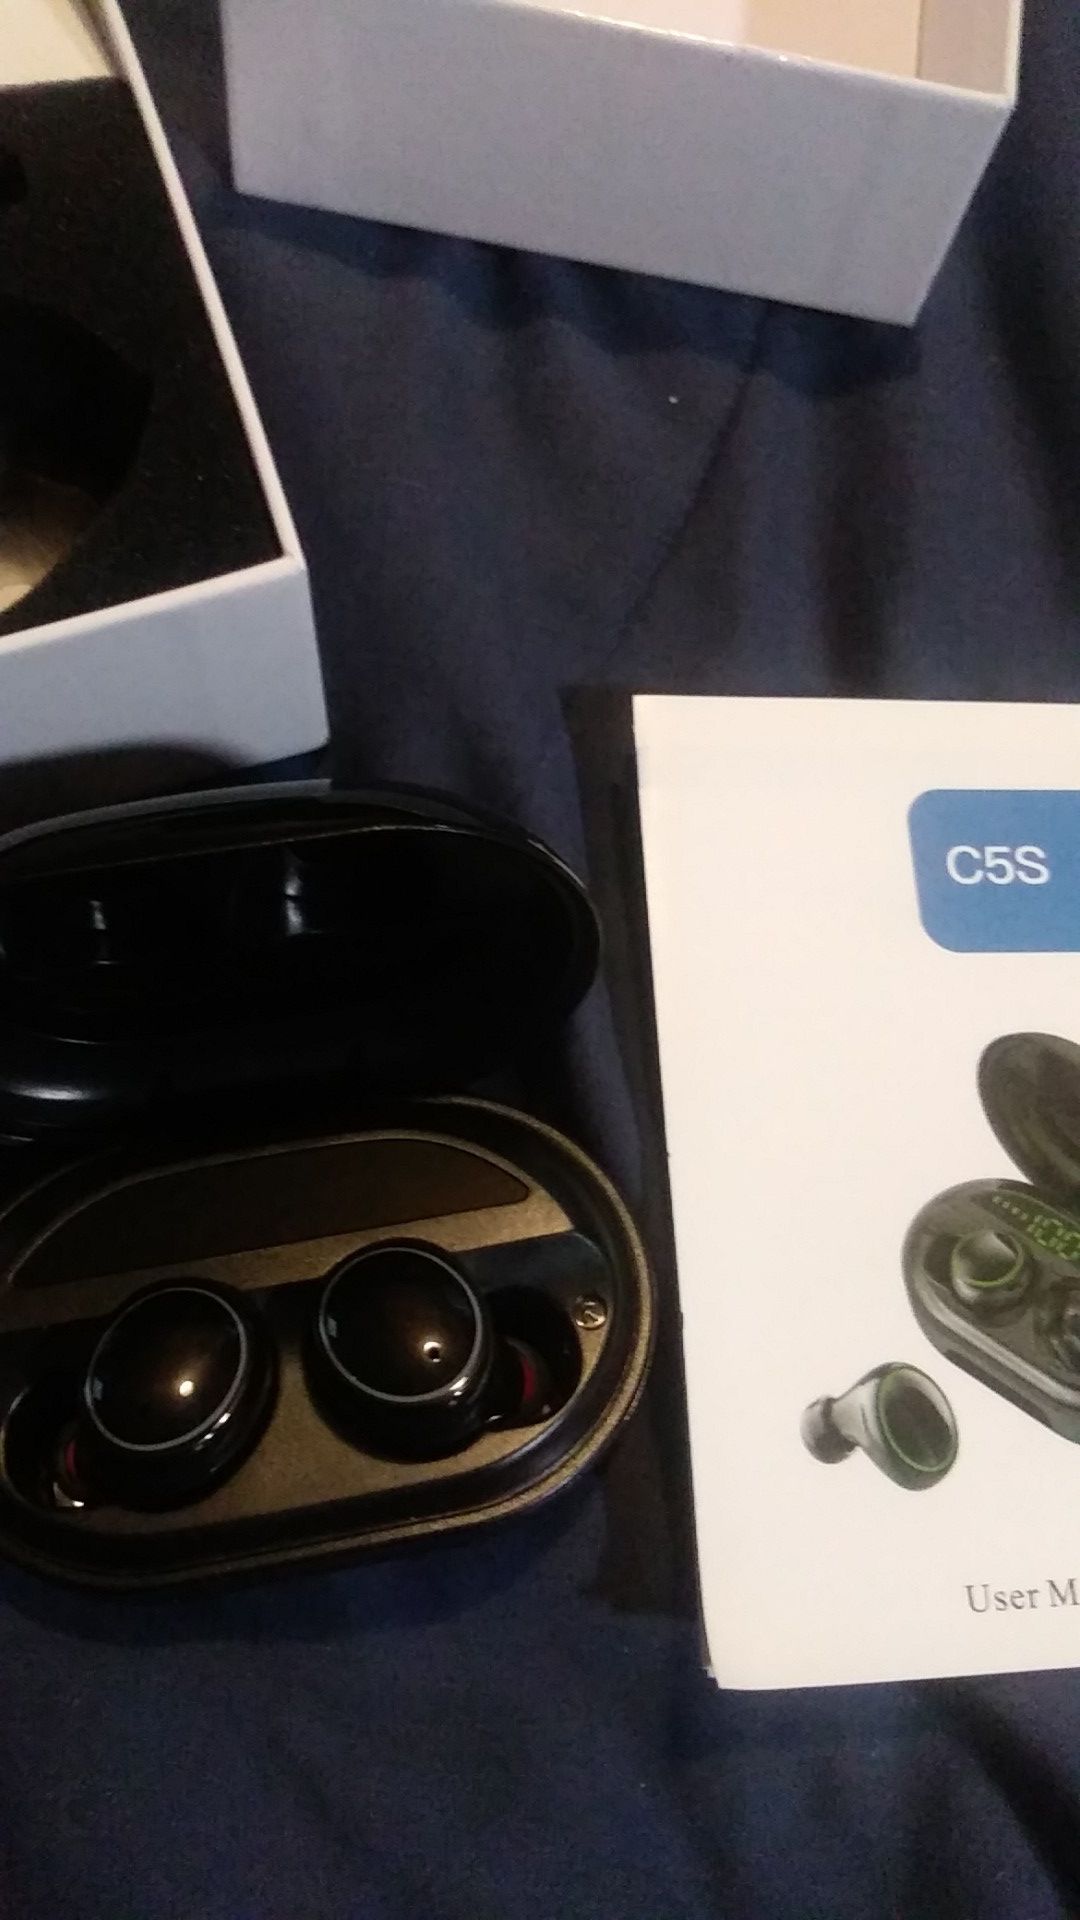 New C5S Wireless Earbuds